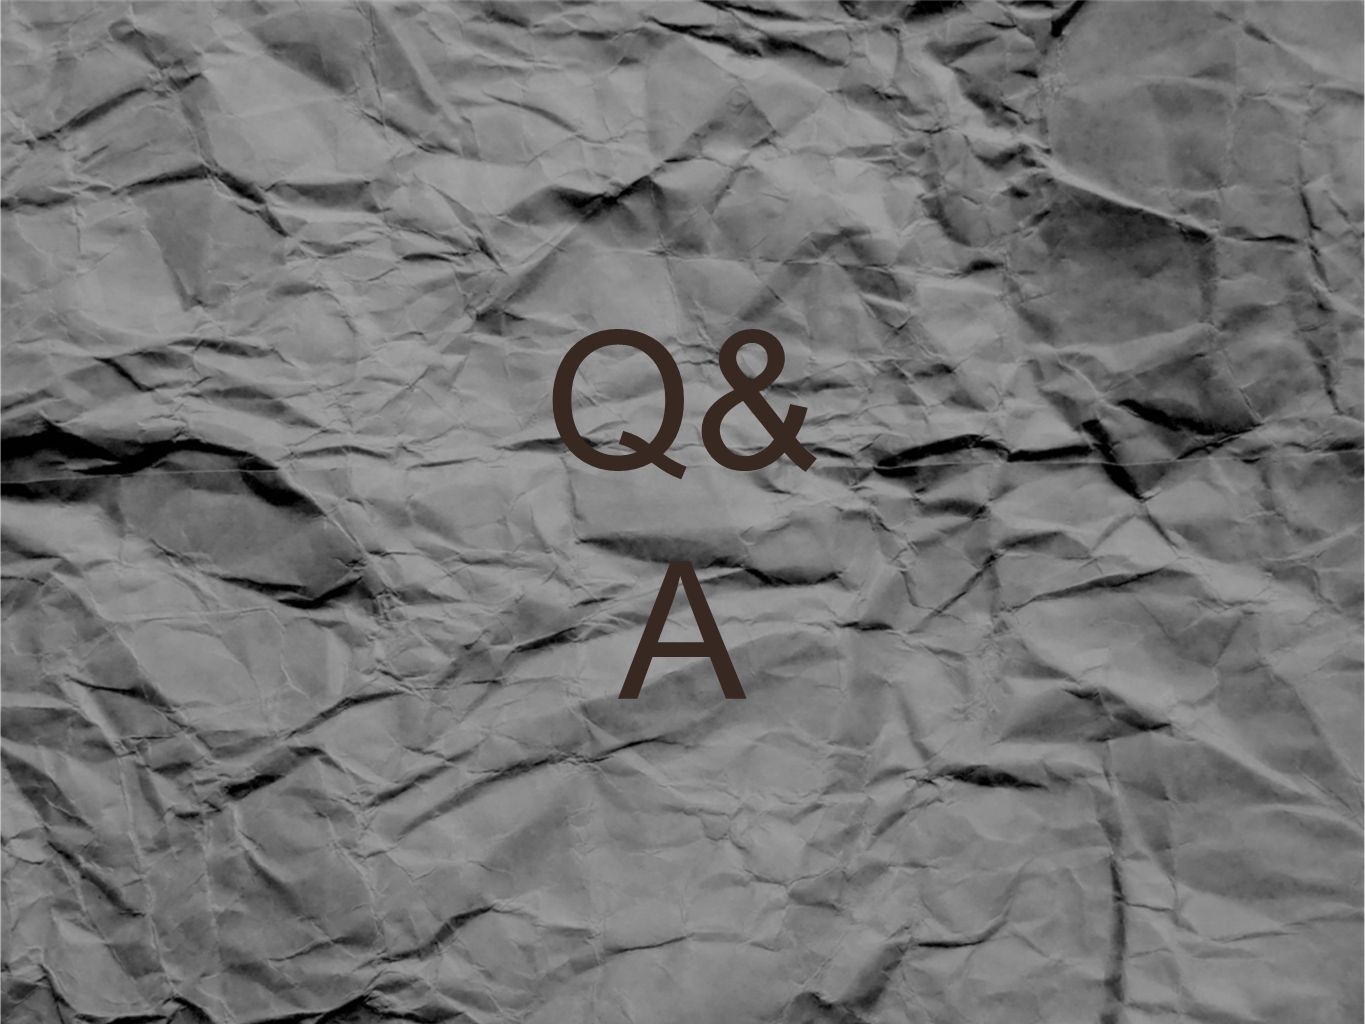 Q& A